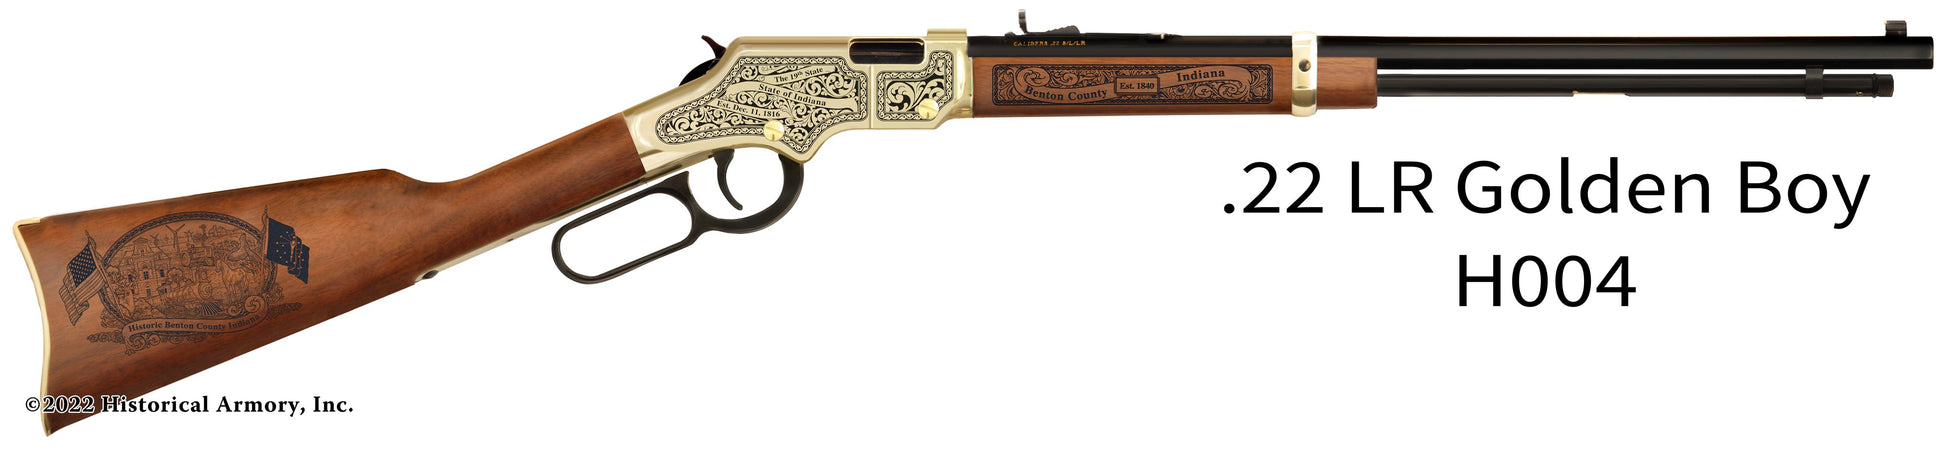 Benton County Indiana Engraved Henry Golden Boy Rifle